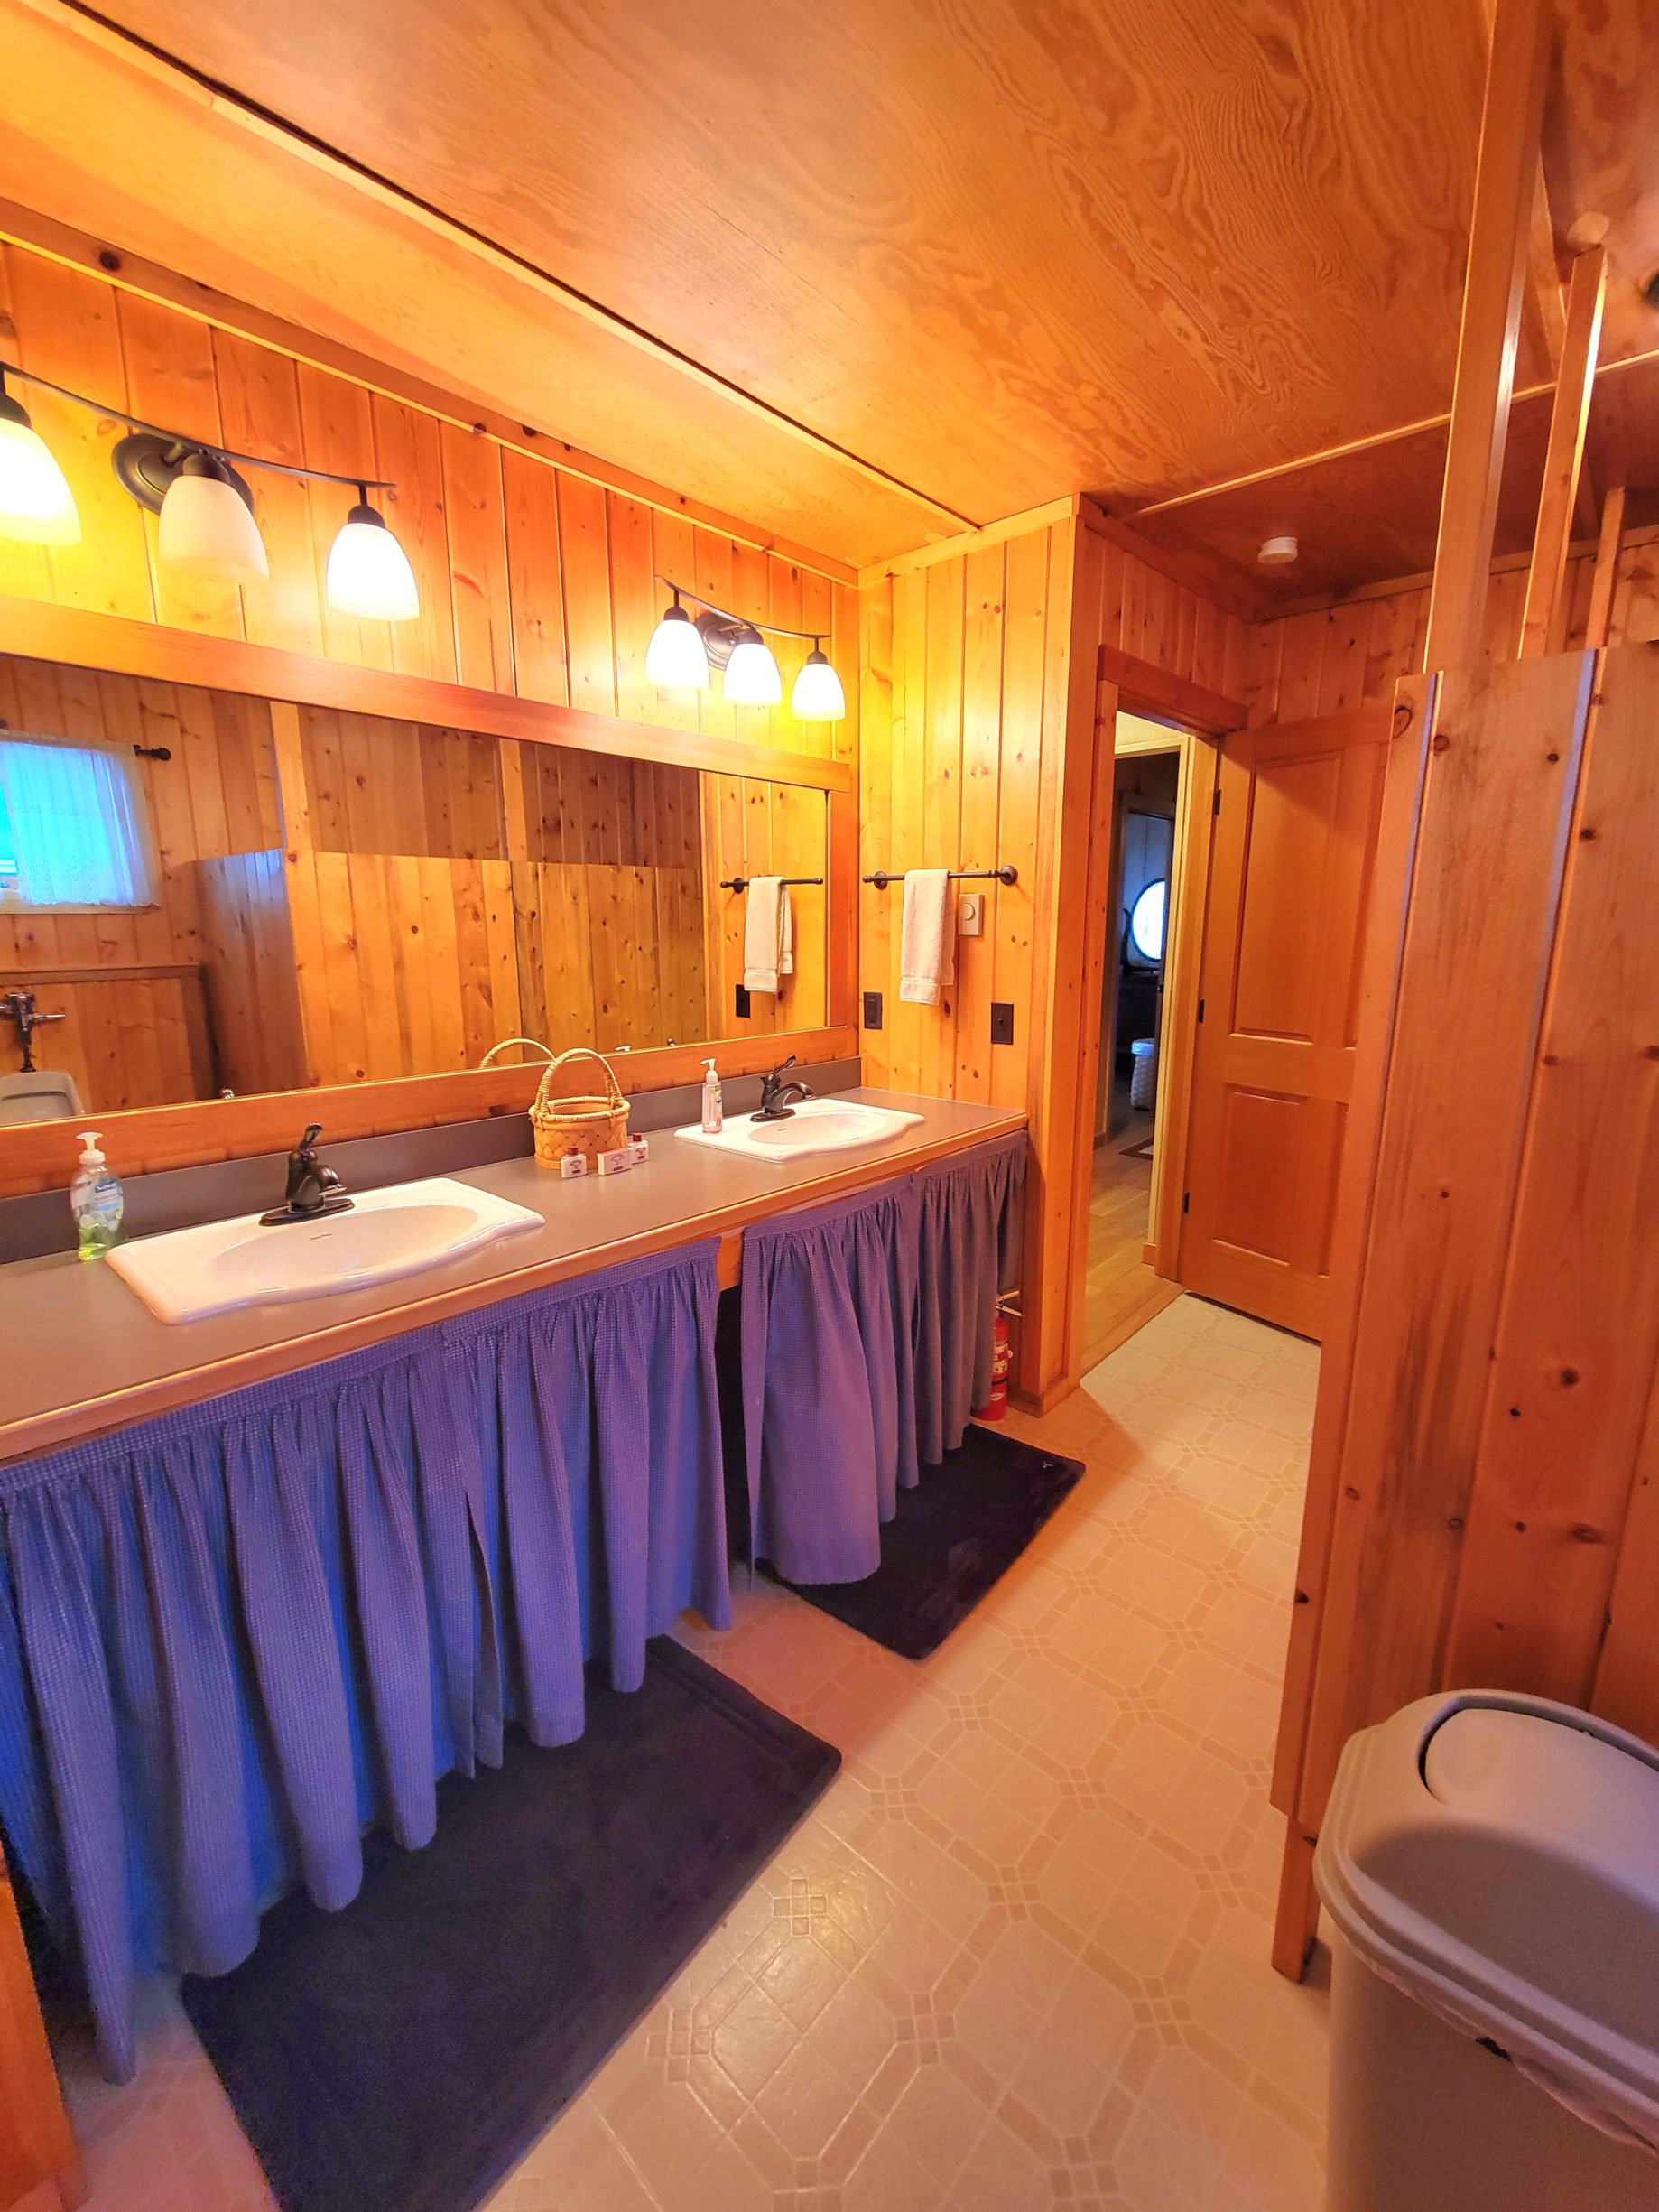 Bunkhouse Bathroom